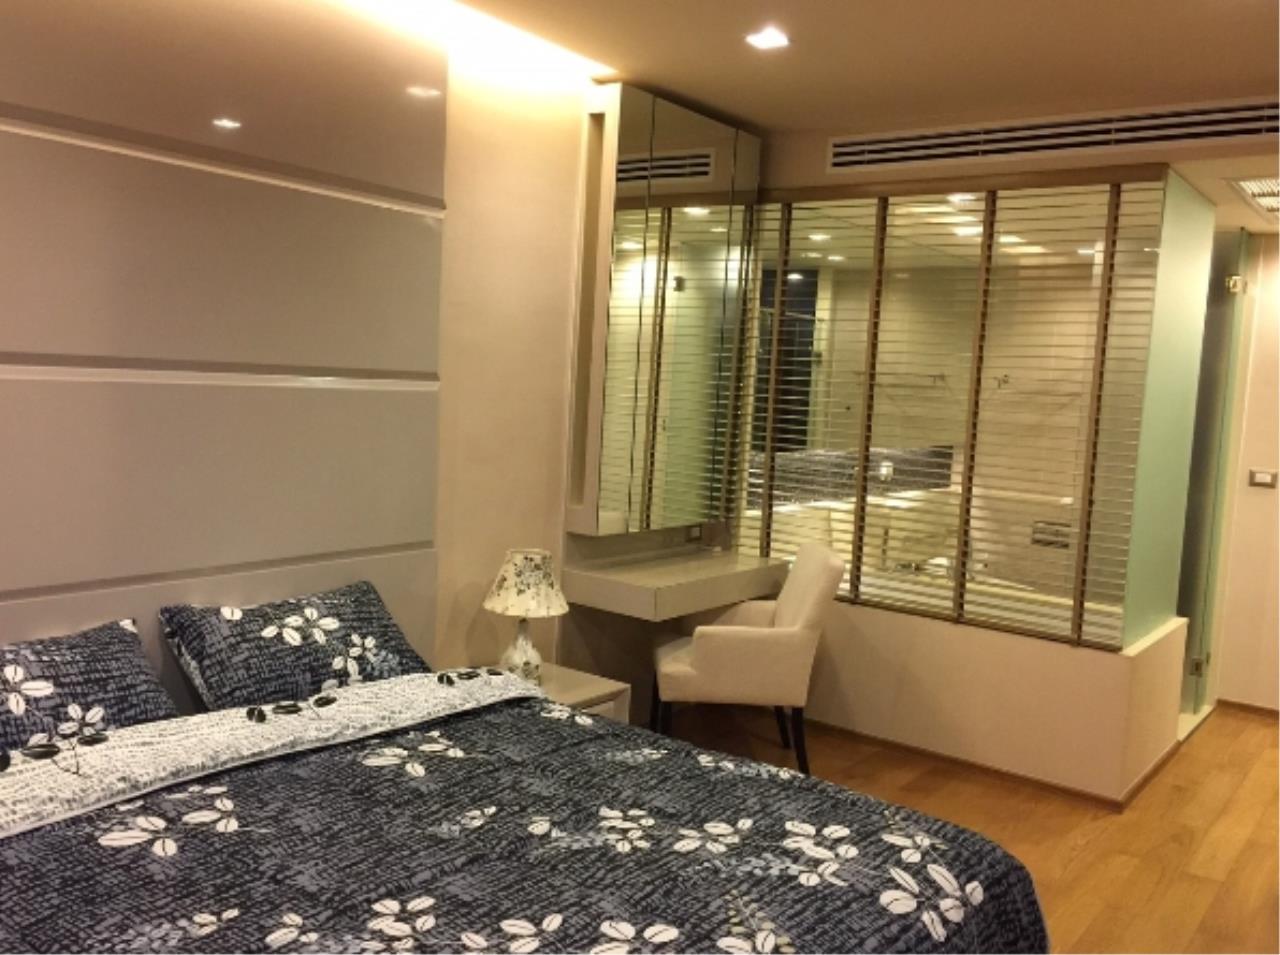 RE/MAX Properties Agency's 1 Bedroom for Rent ADDRESS SATHORN 1